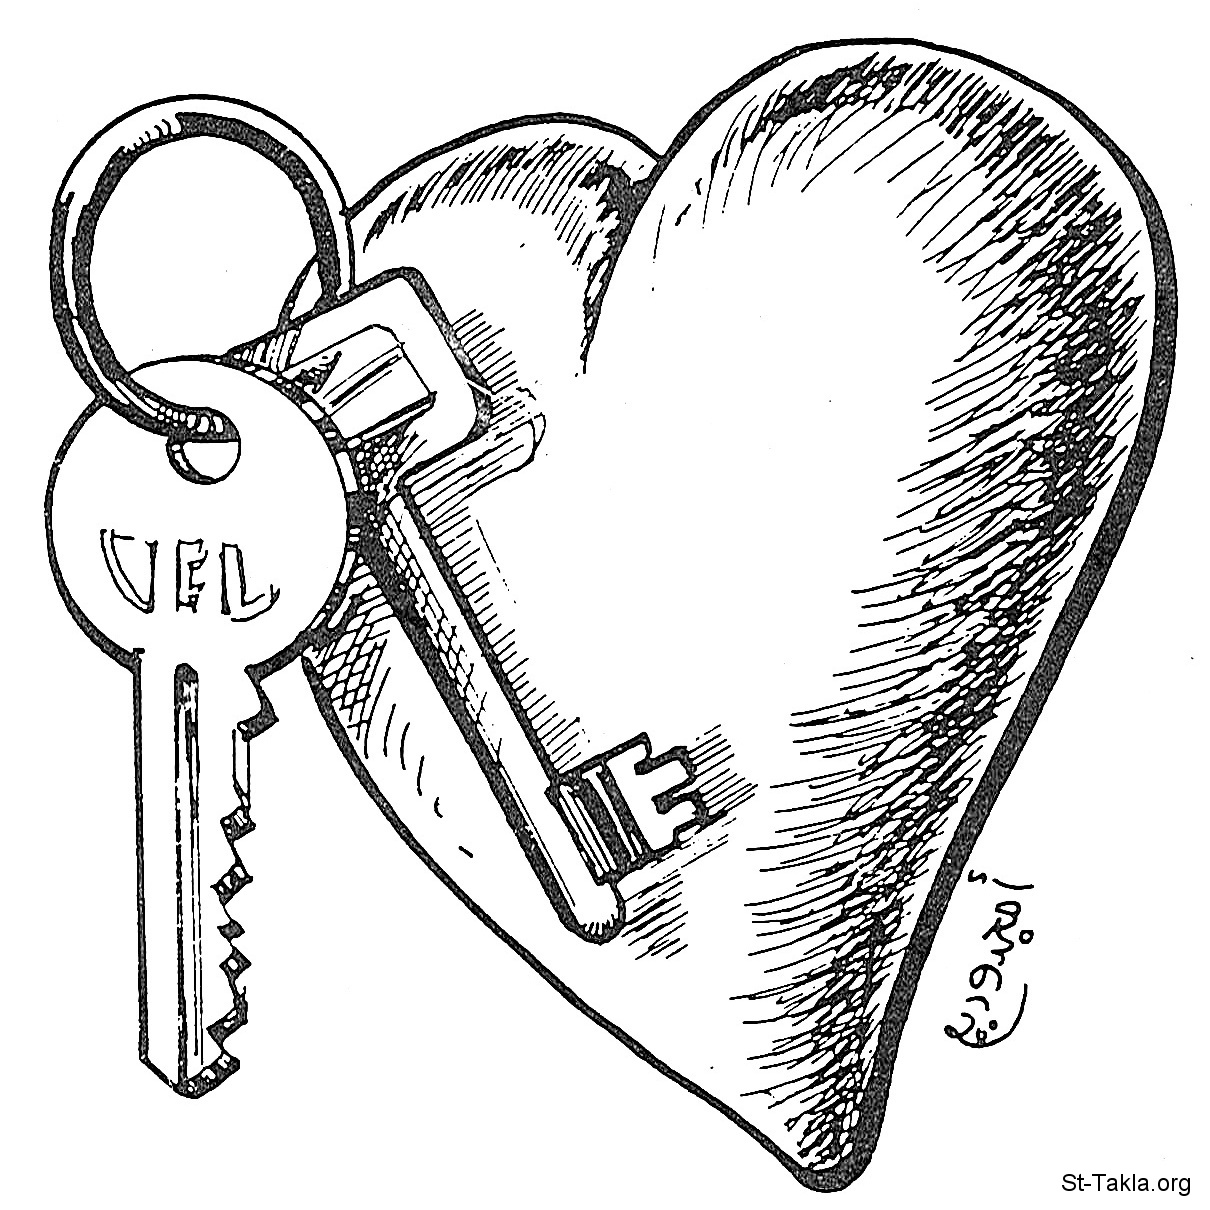 Image Heart, Key صورة مفاتيح القلب، حفظ القلب